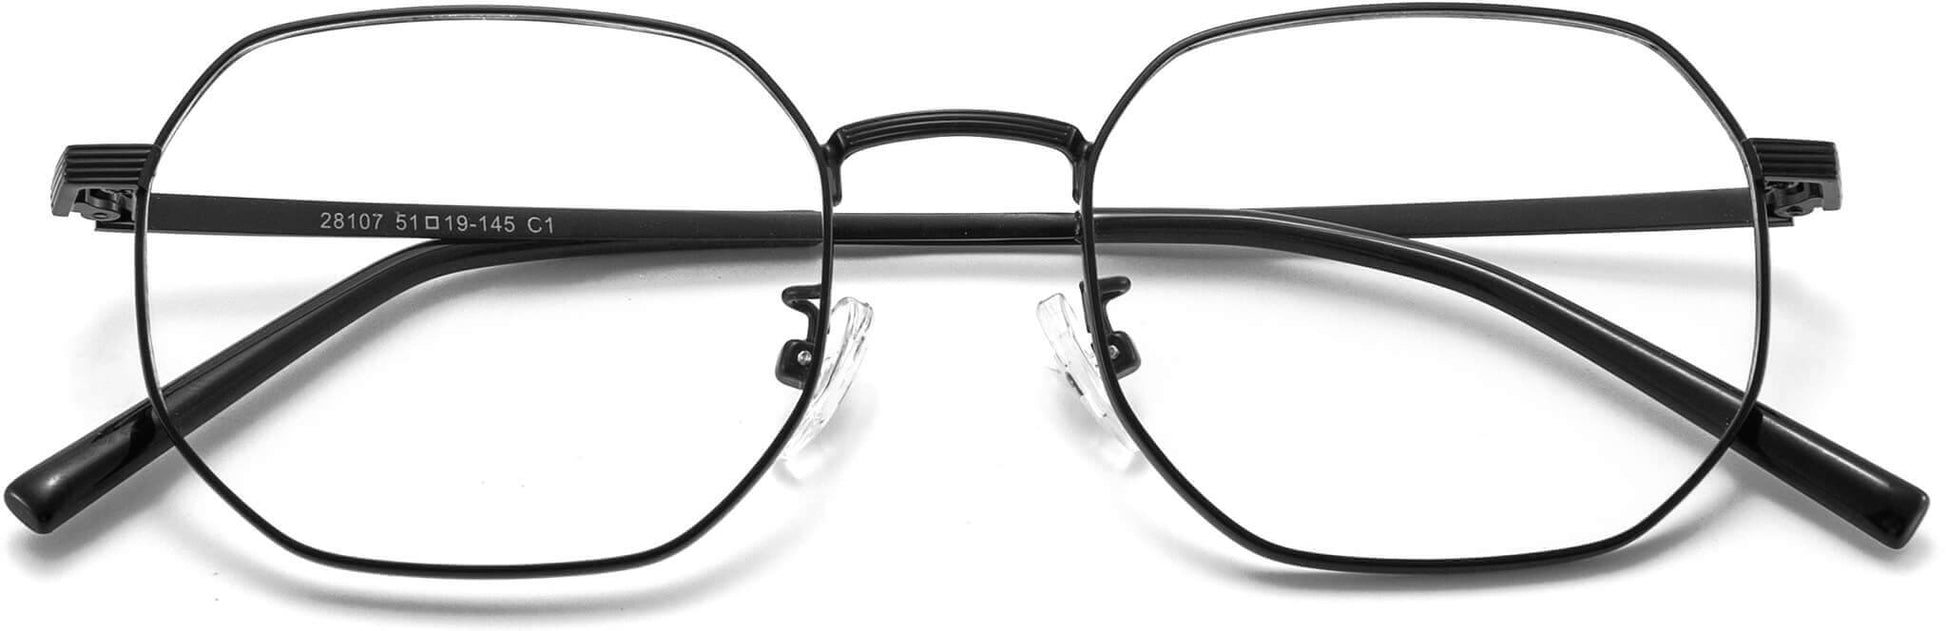 Slaine Matte Black Metal  Eyeglasses from ANRRI, Closed View